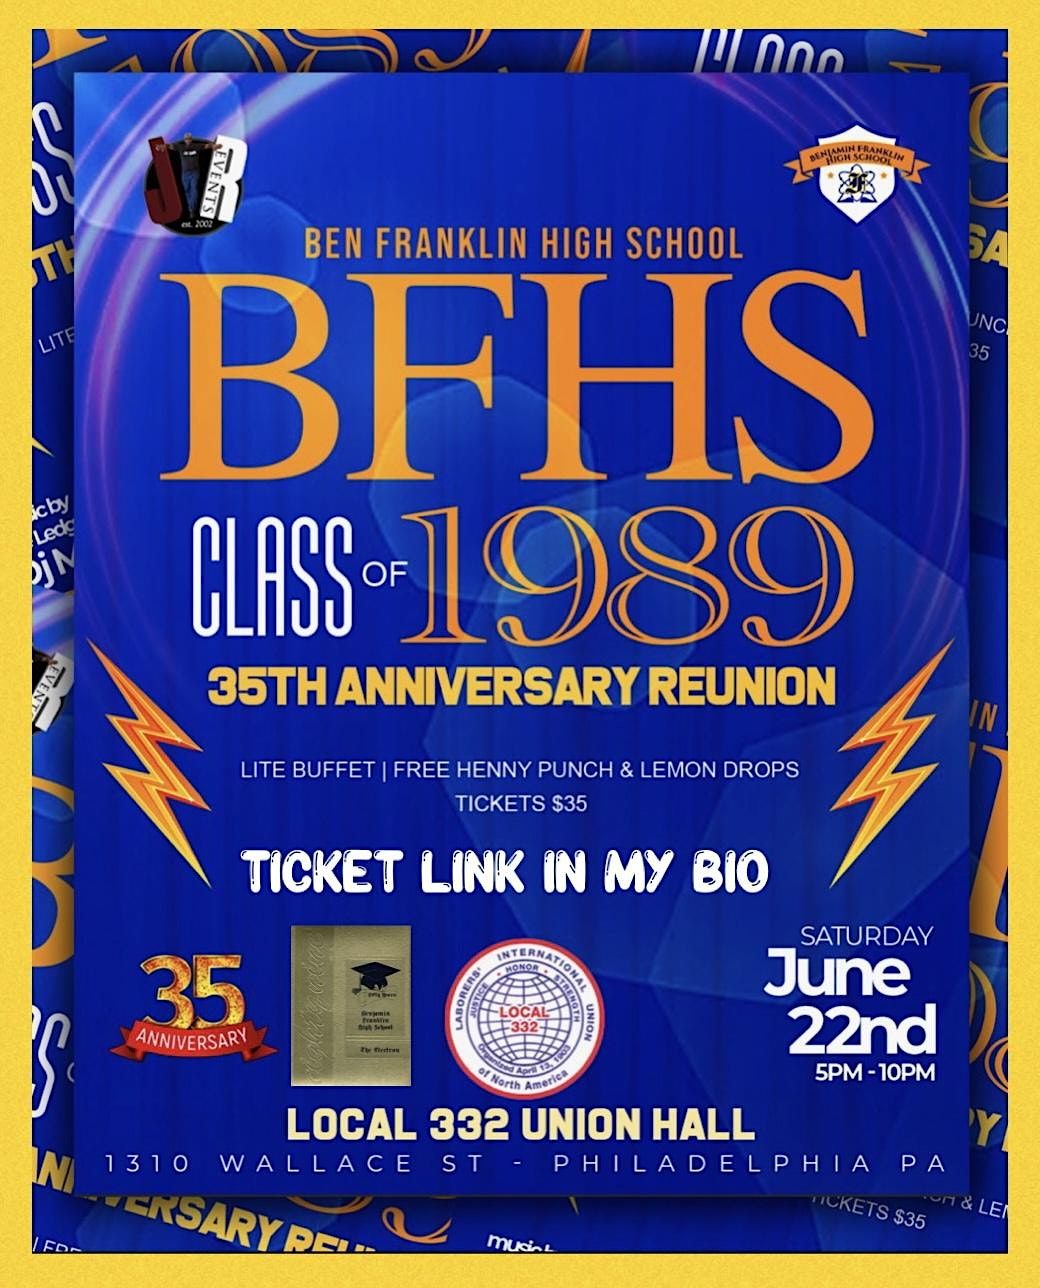 BEN FRANKLIN HIGH SCHOOL 35TH YEAR ANNIVERSARY